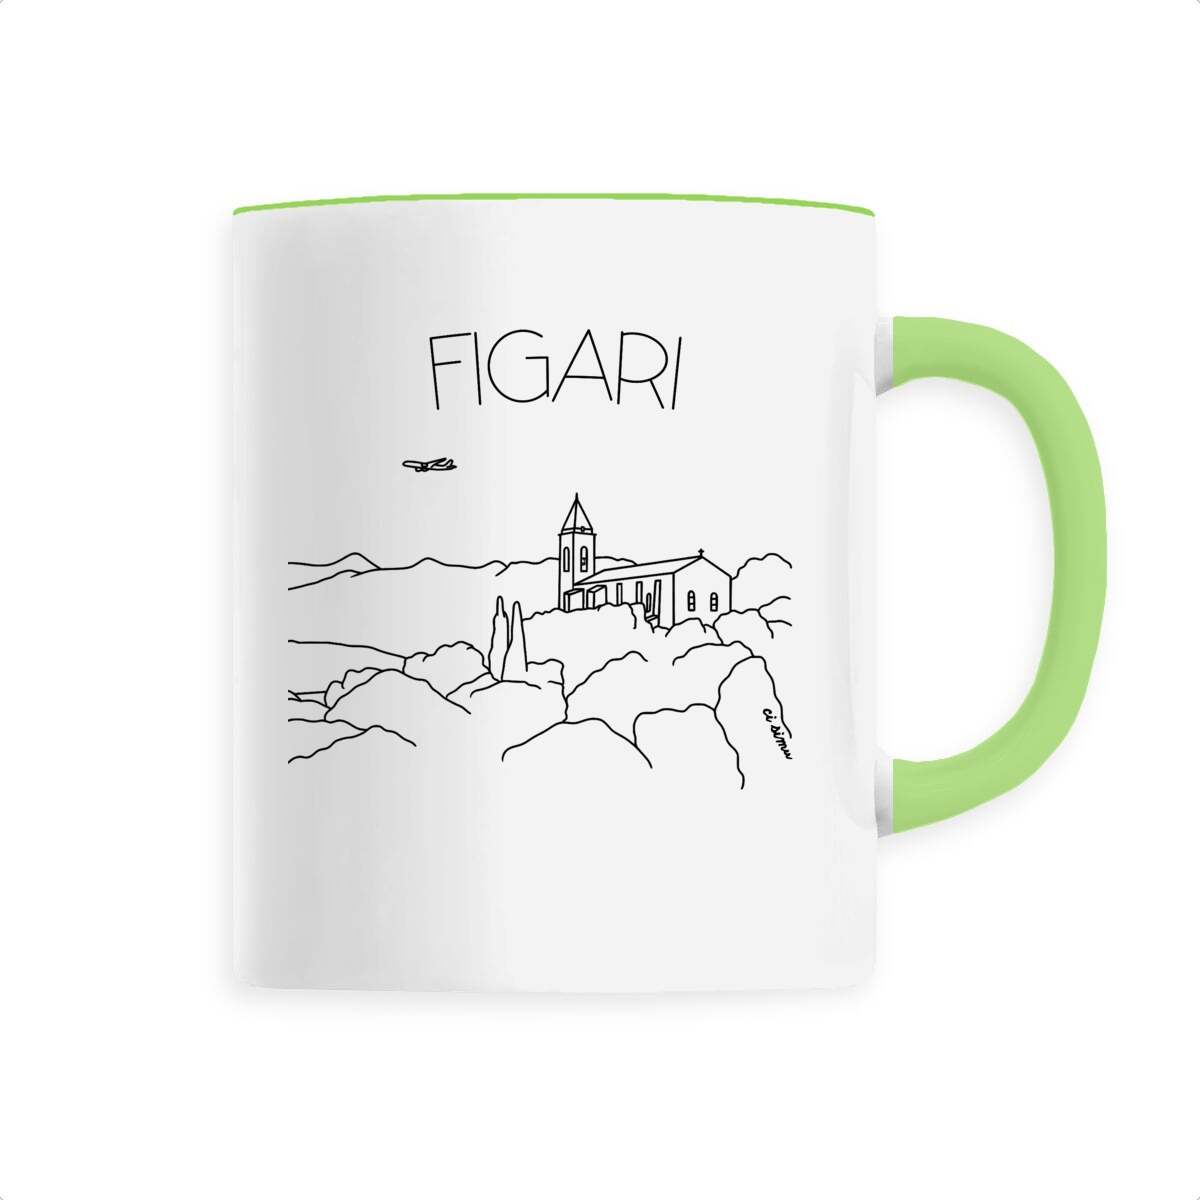 Mug de Figari